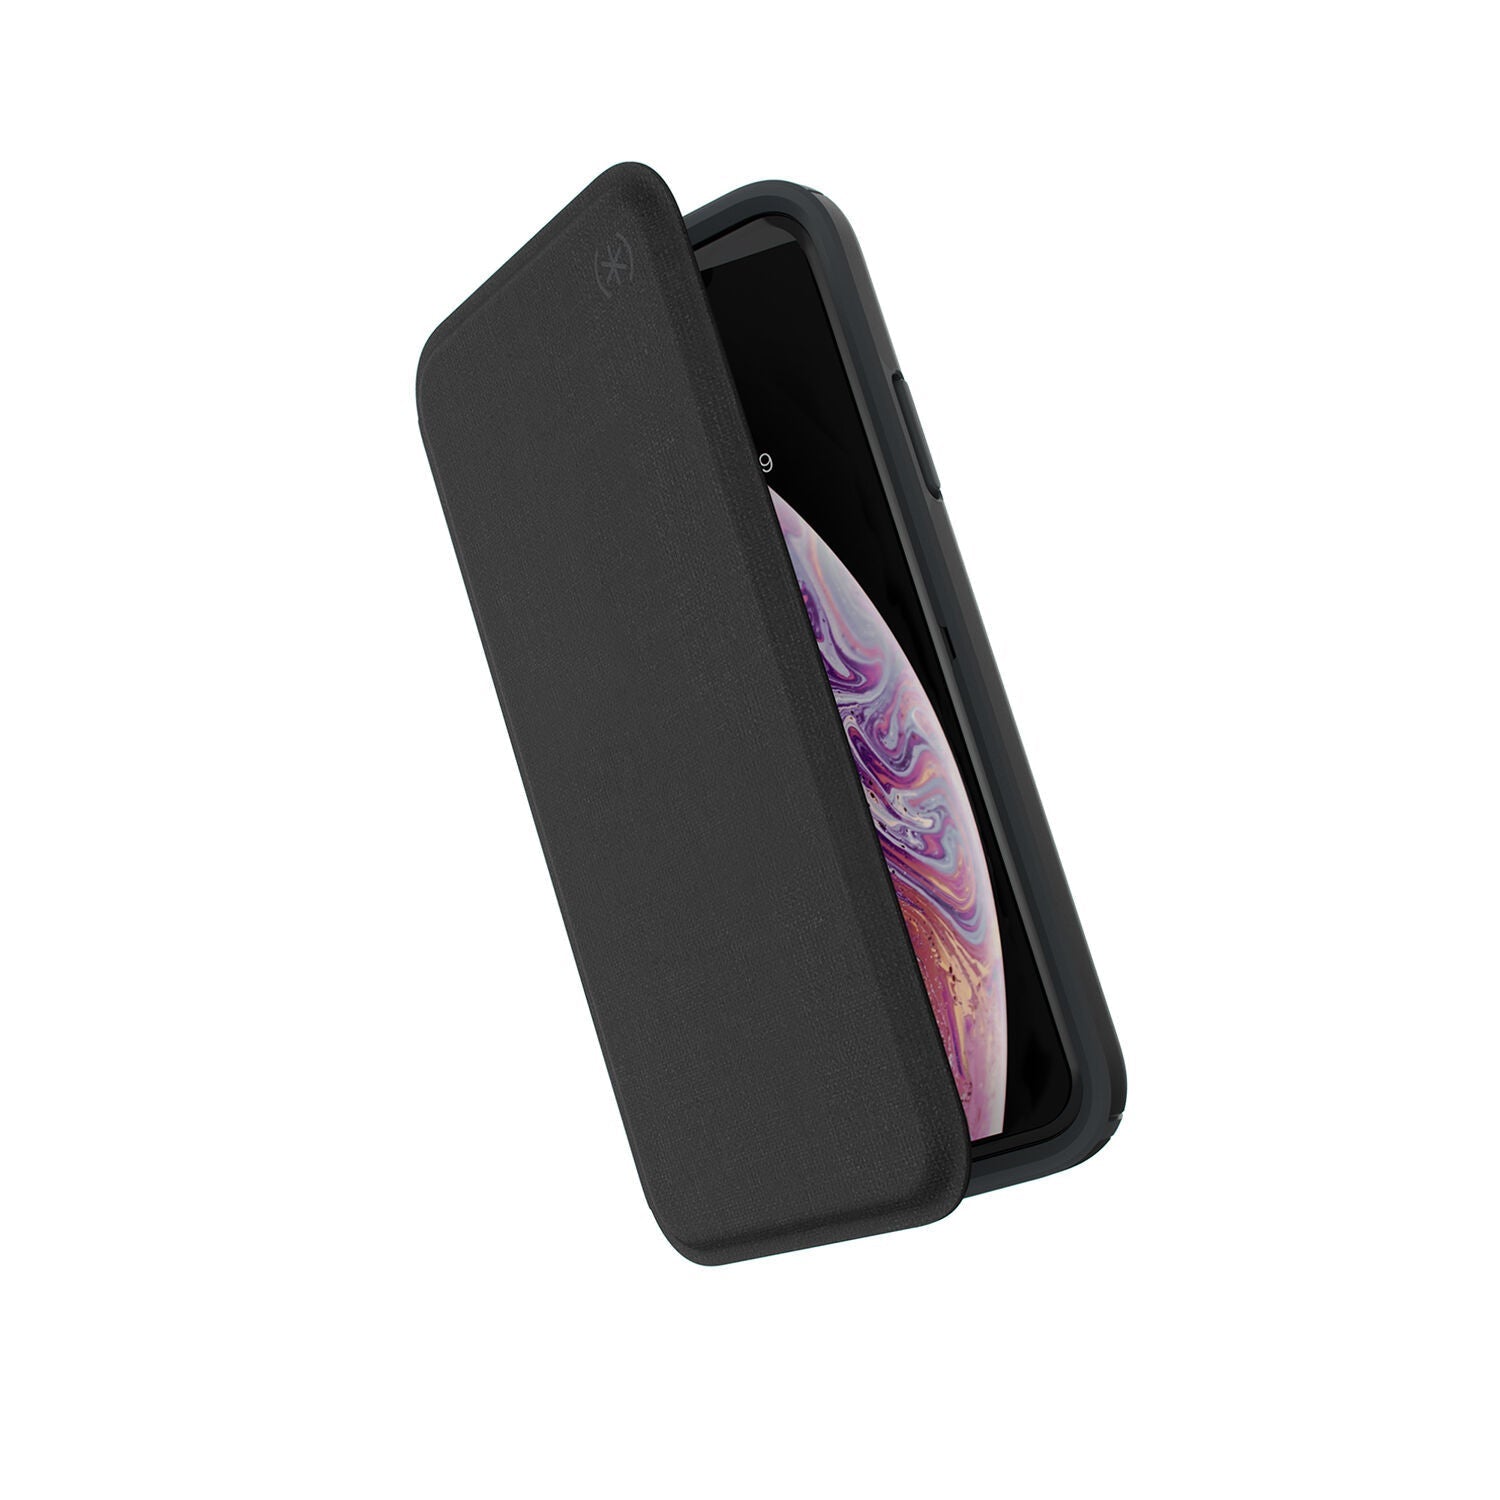 Speck Presidio Folio iPhone Xs / x Cases Heathered Black/Black/Slate Grey